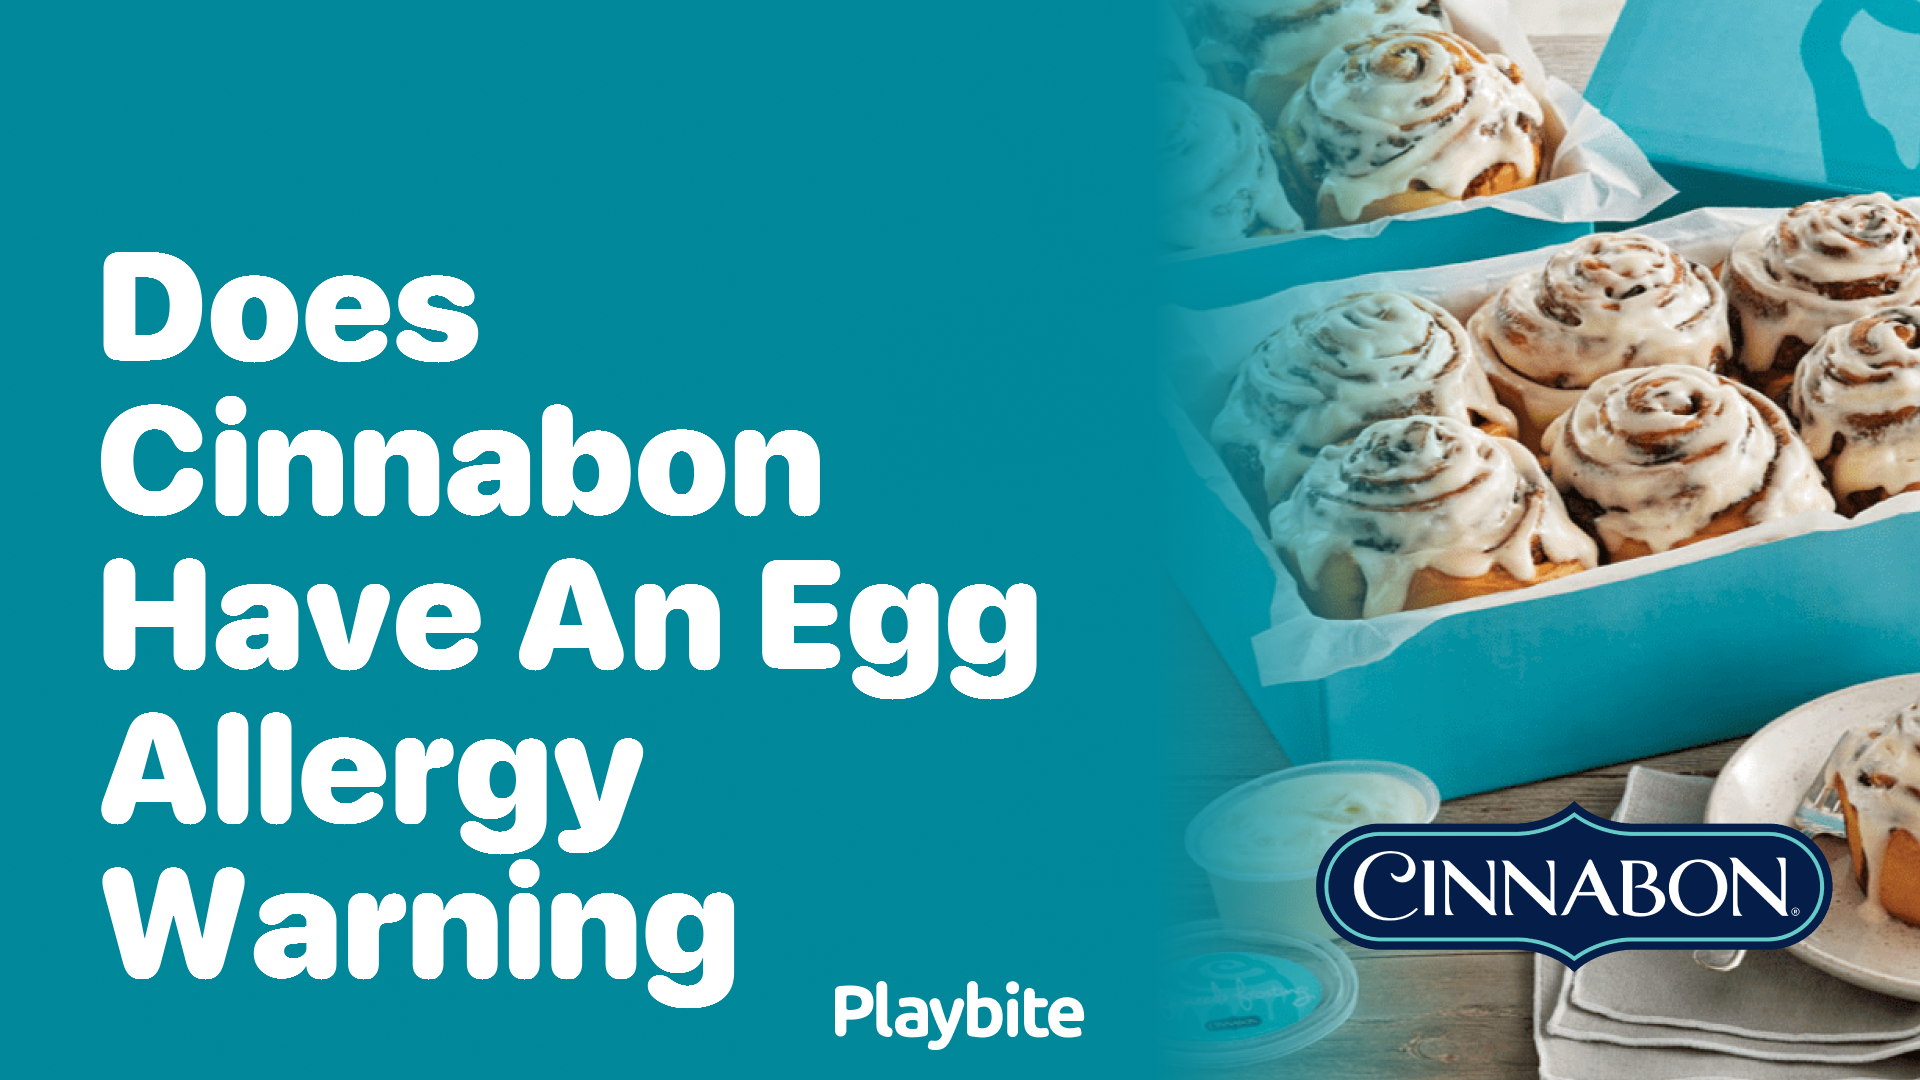 Does Cinnabon Have an Egg Allergy Warning?